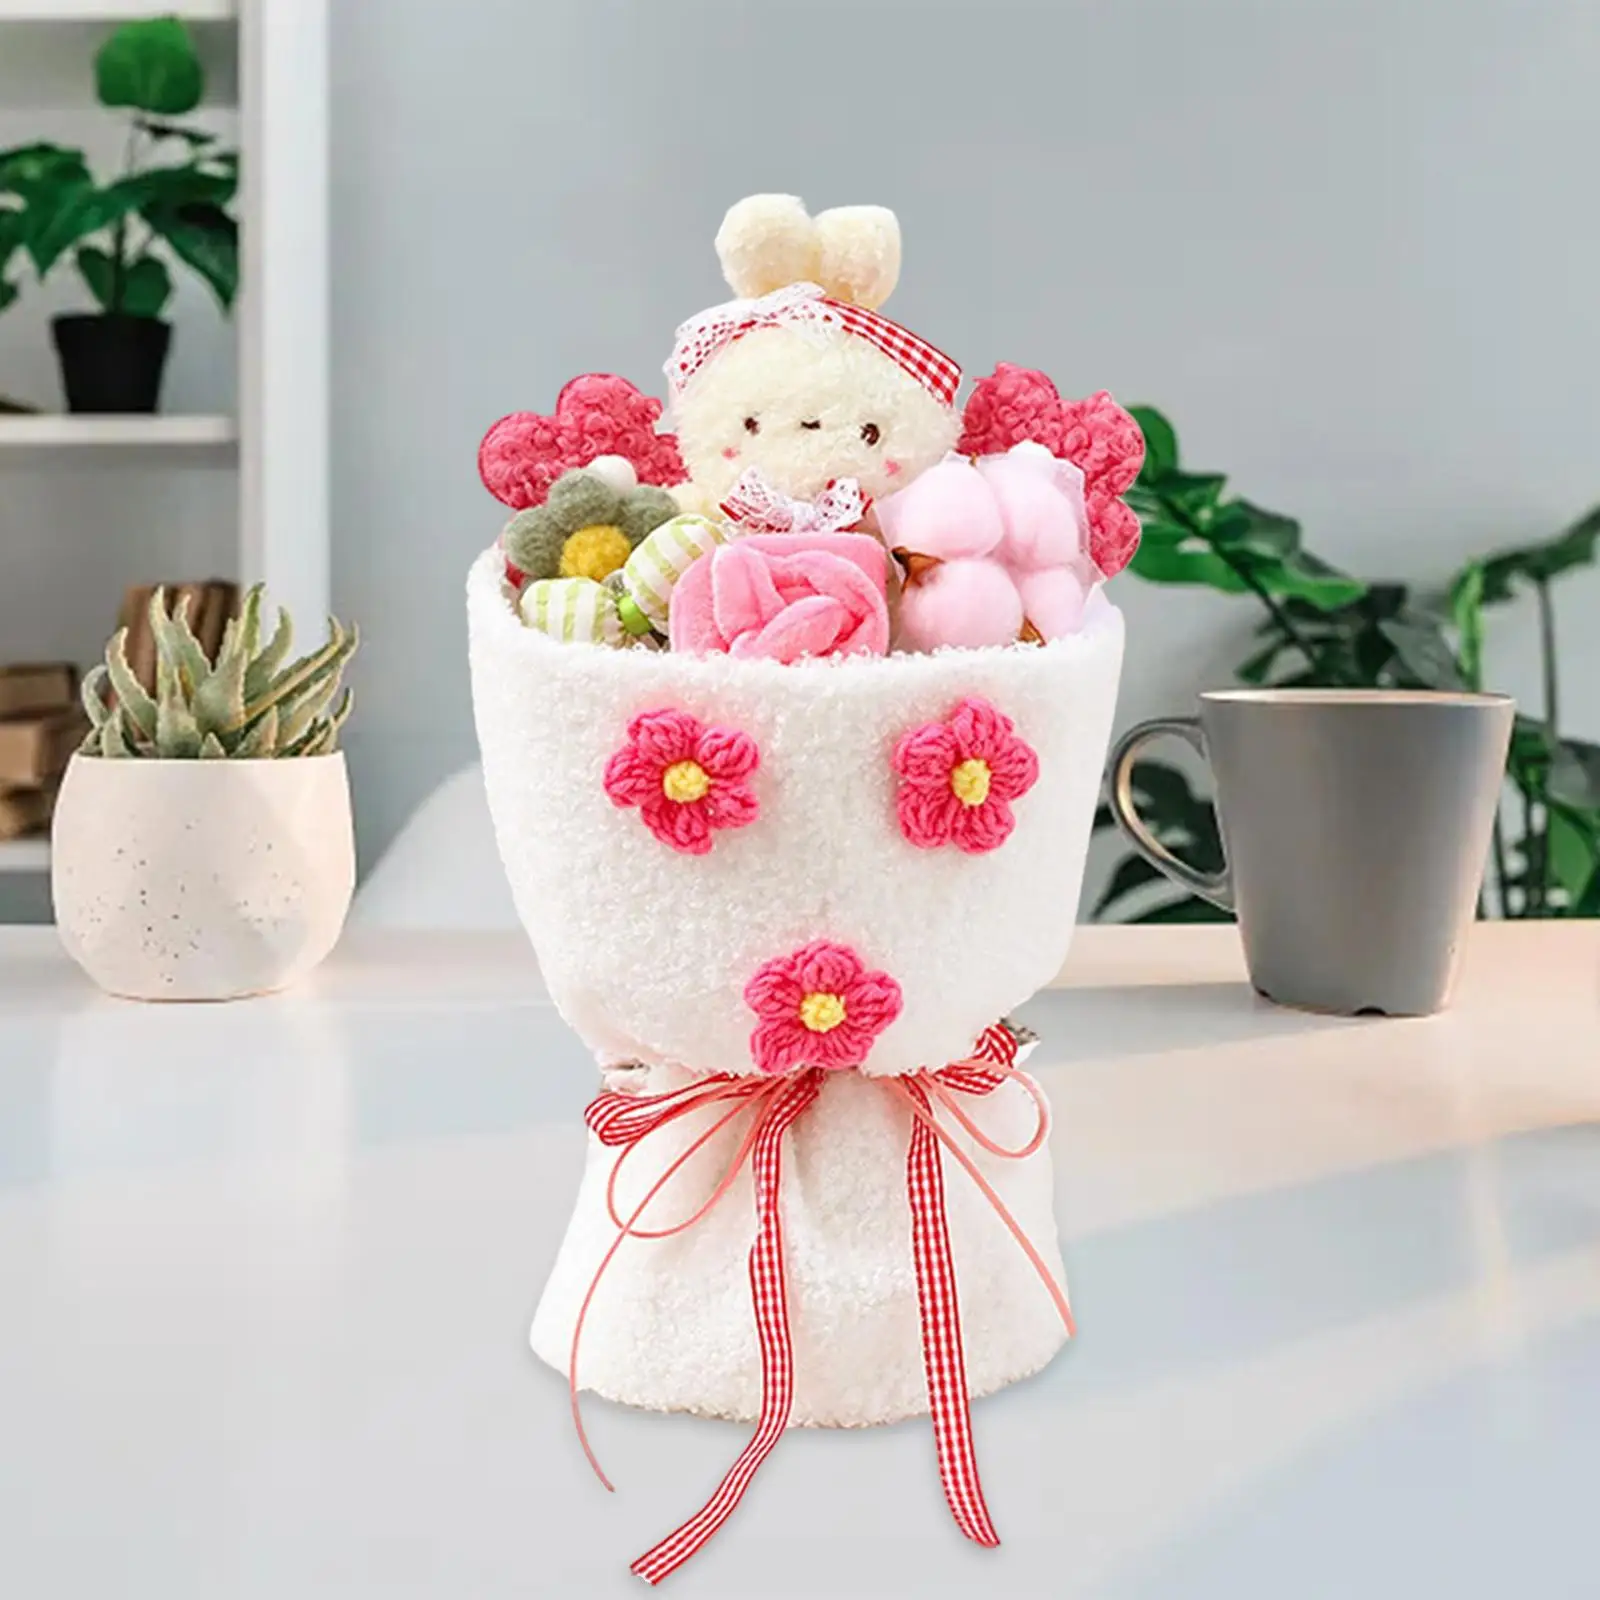 Stuffed Animal Doll Anniversaries Celebrations Gift Cute Plush